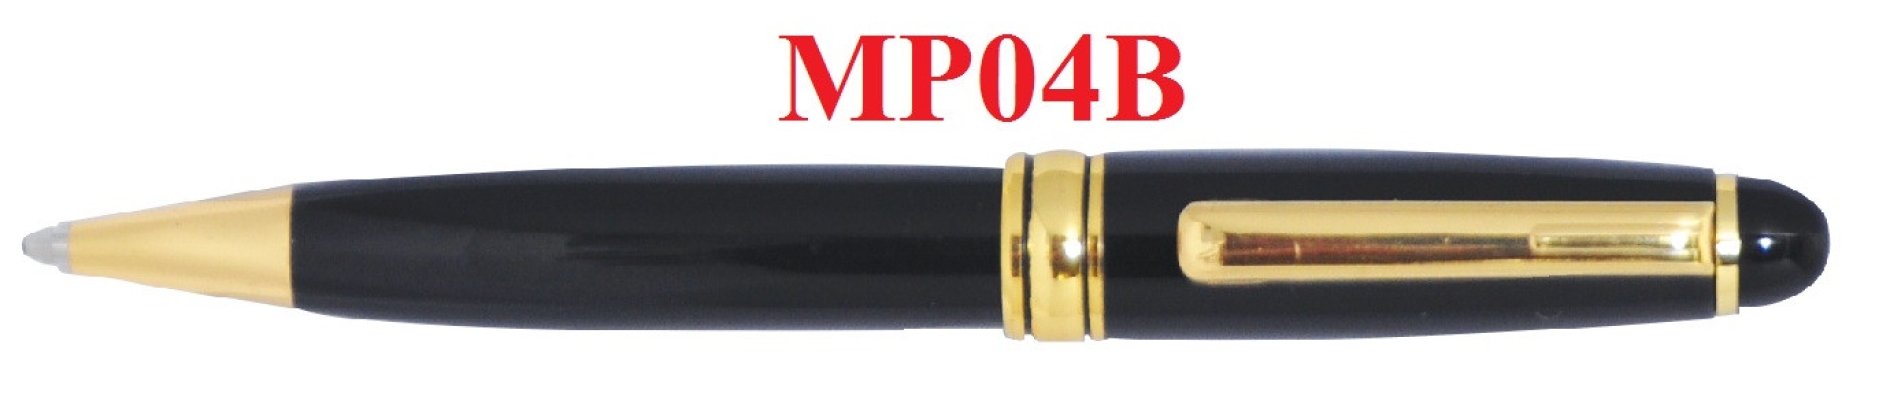 MP04B Metal Pen